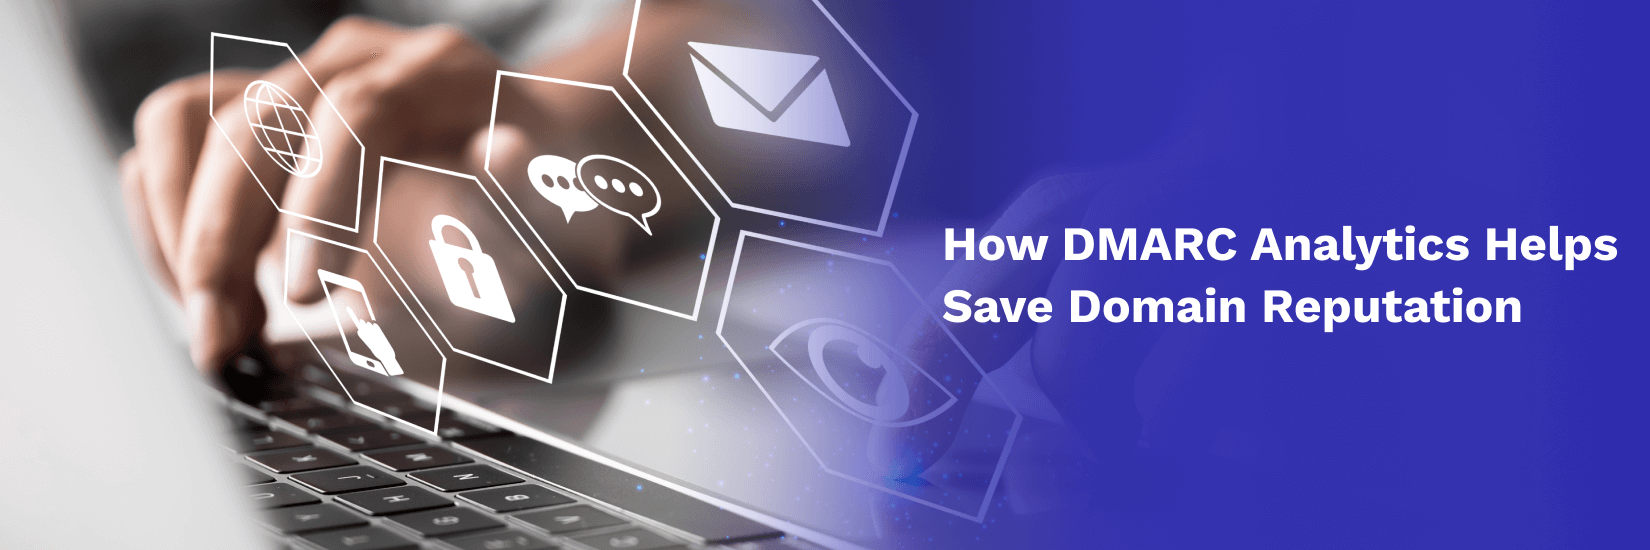 How DMARC Analytics Helps Save Domain Reputation